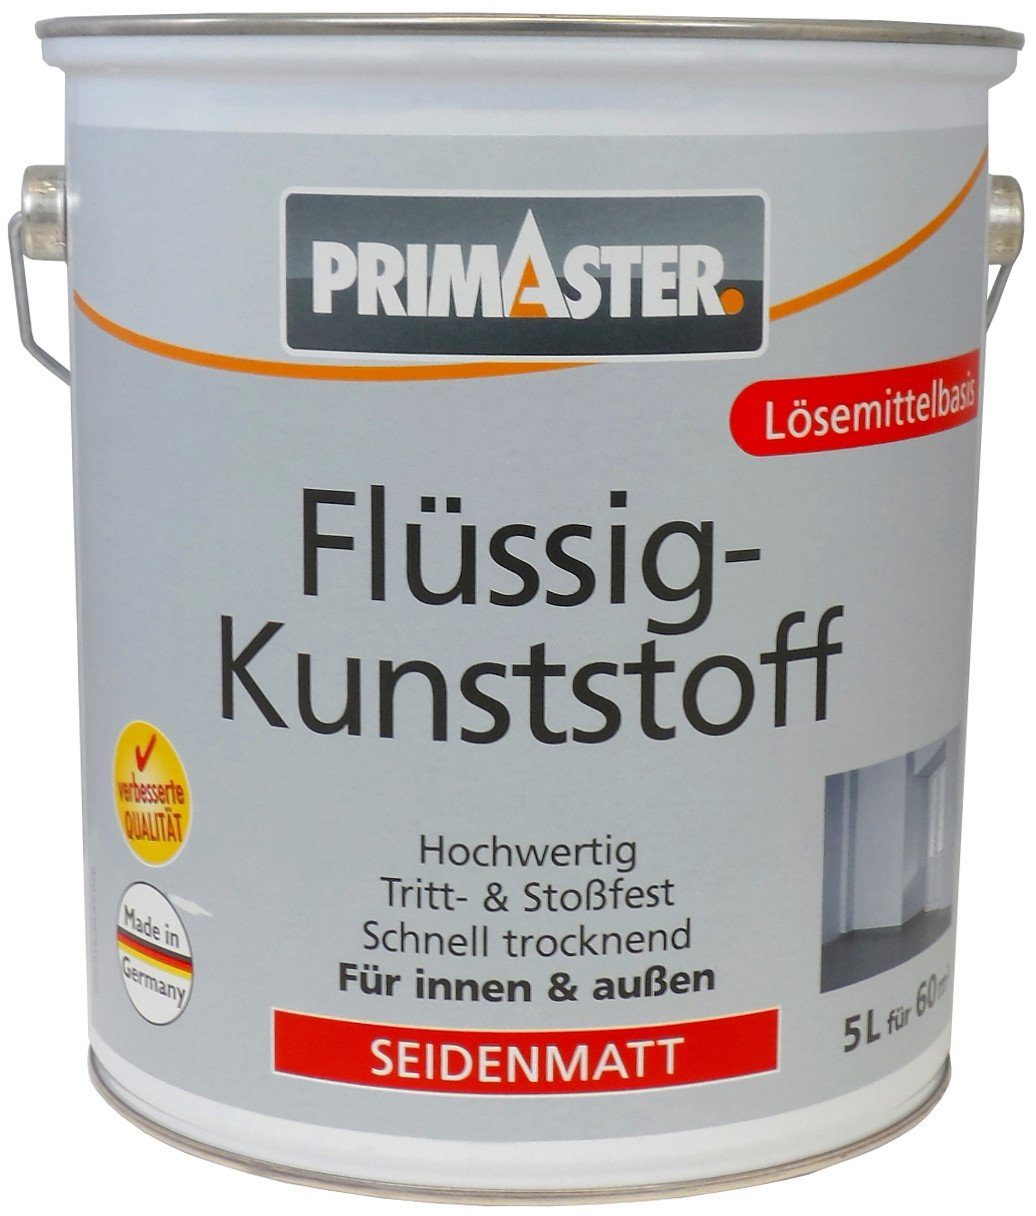 Primaster Acryl-Flüssigkunststoff Primaster Premium Flüssigkunststoff L 5 8012 RAL